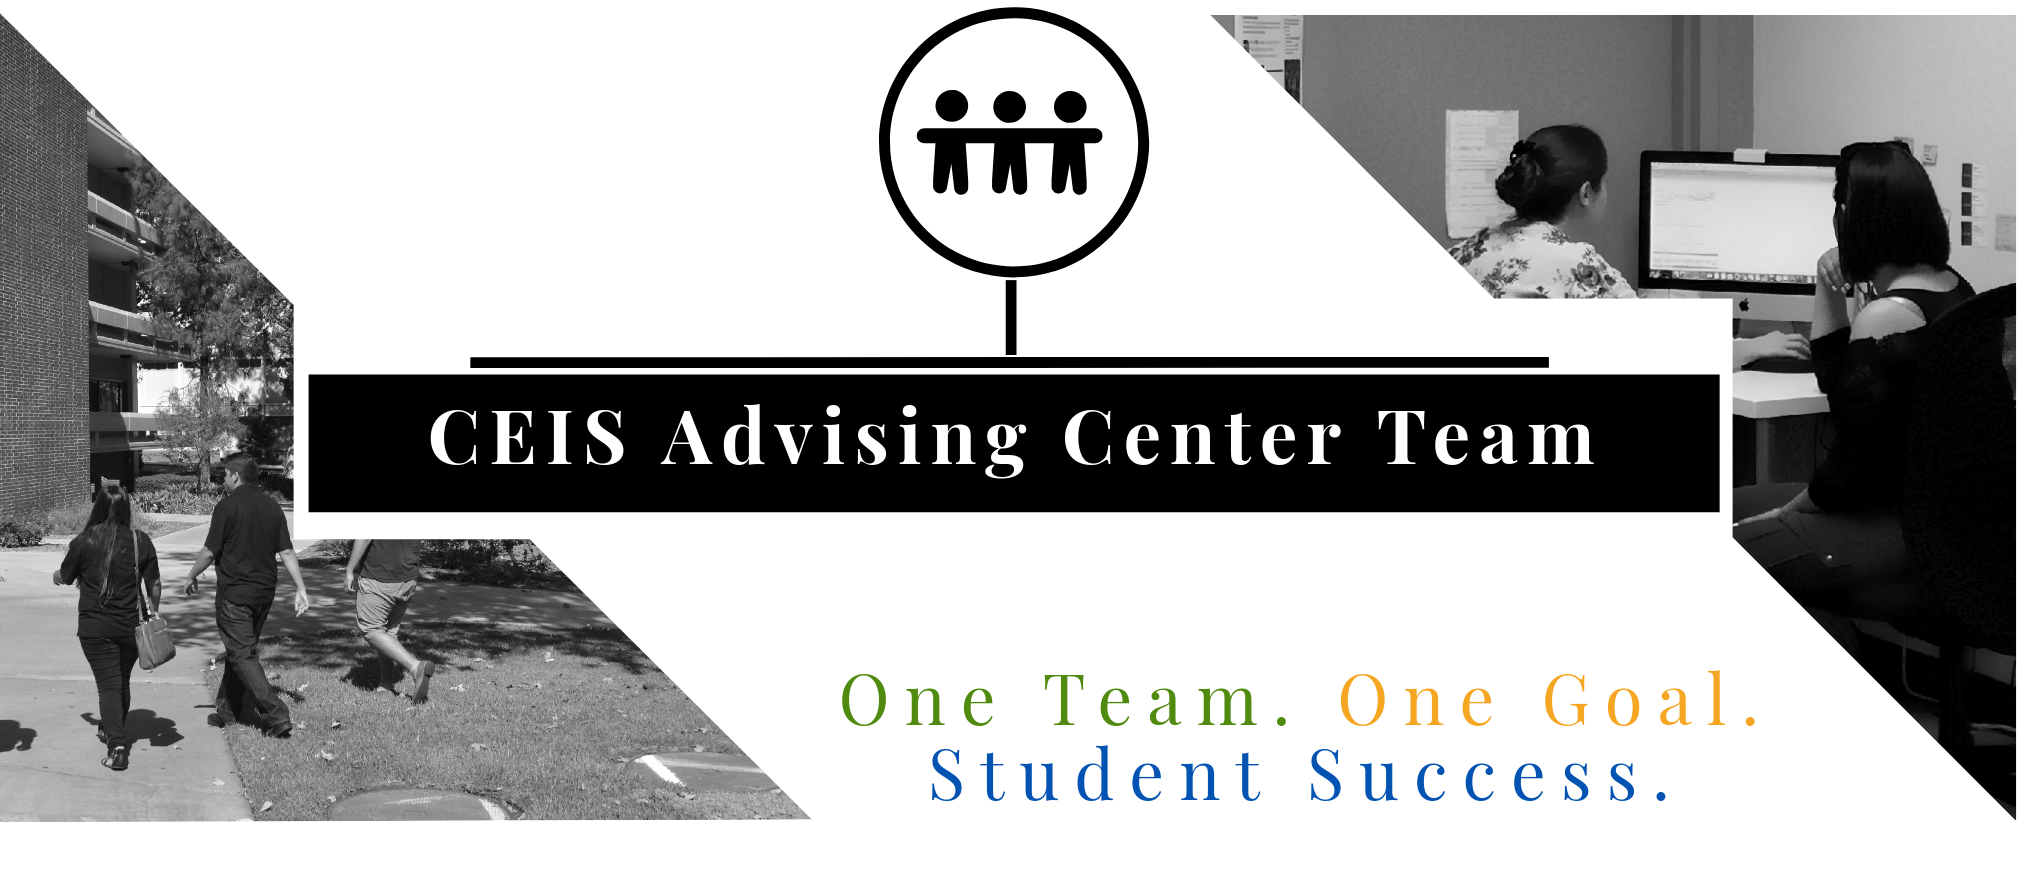 CEIS Advising Center Team.  One Team. One Goal. Student Success.